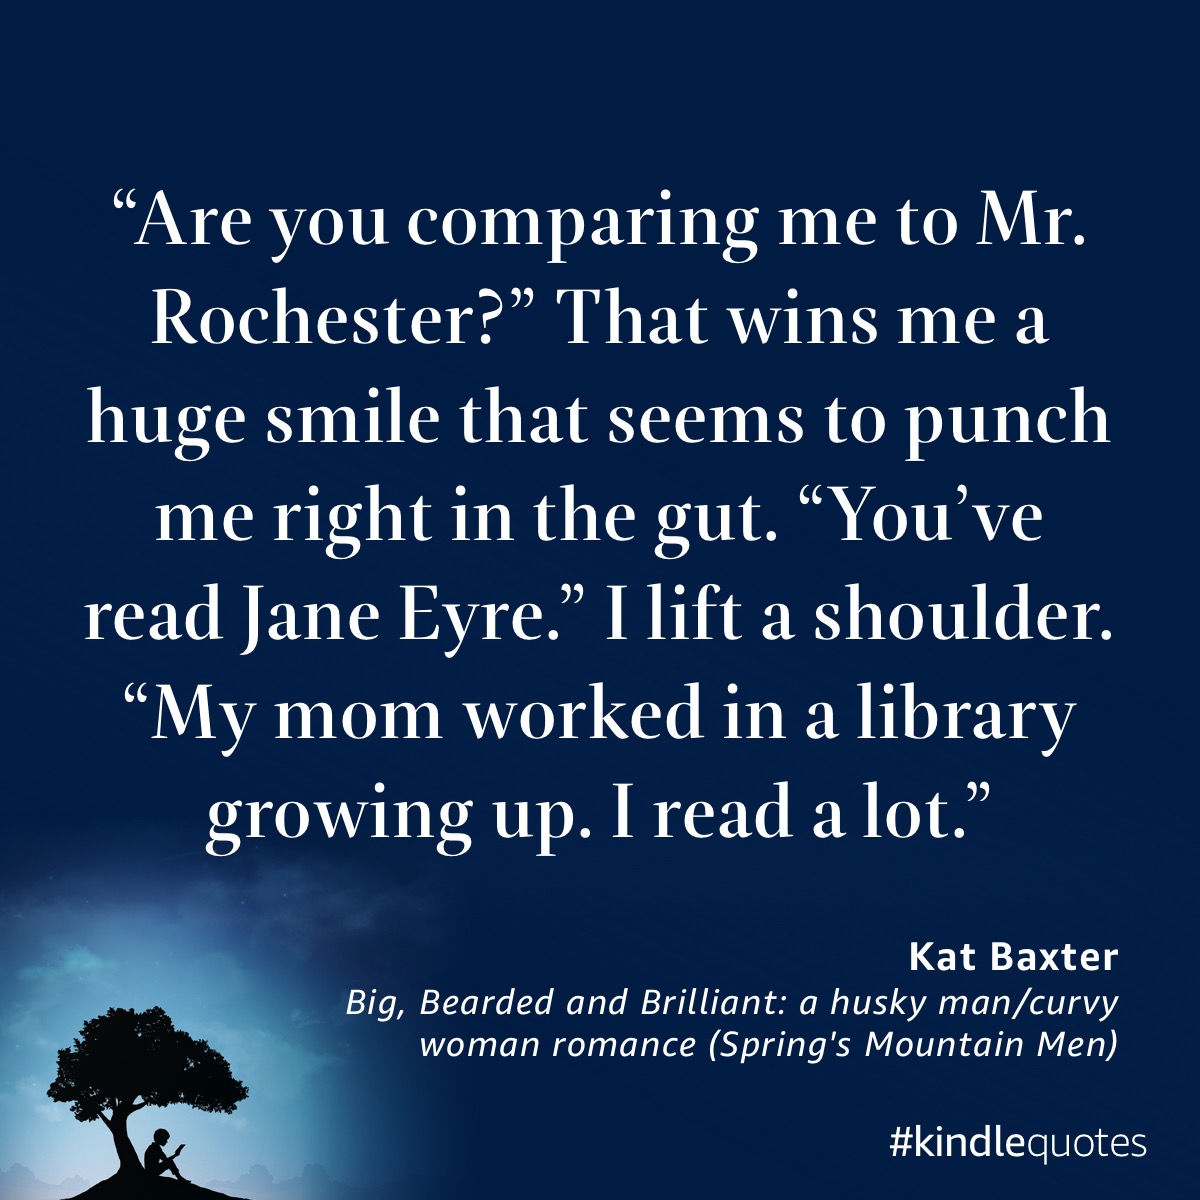 Book quote Kat Baxter